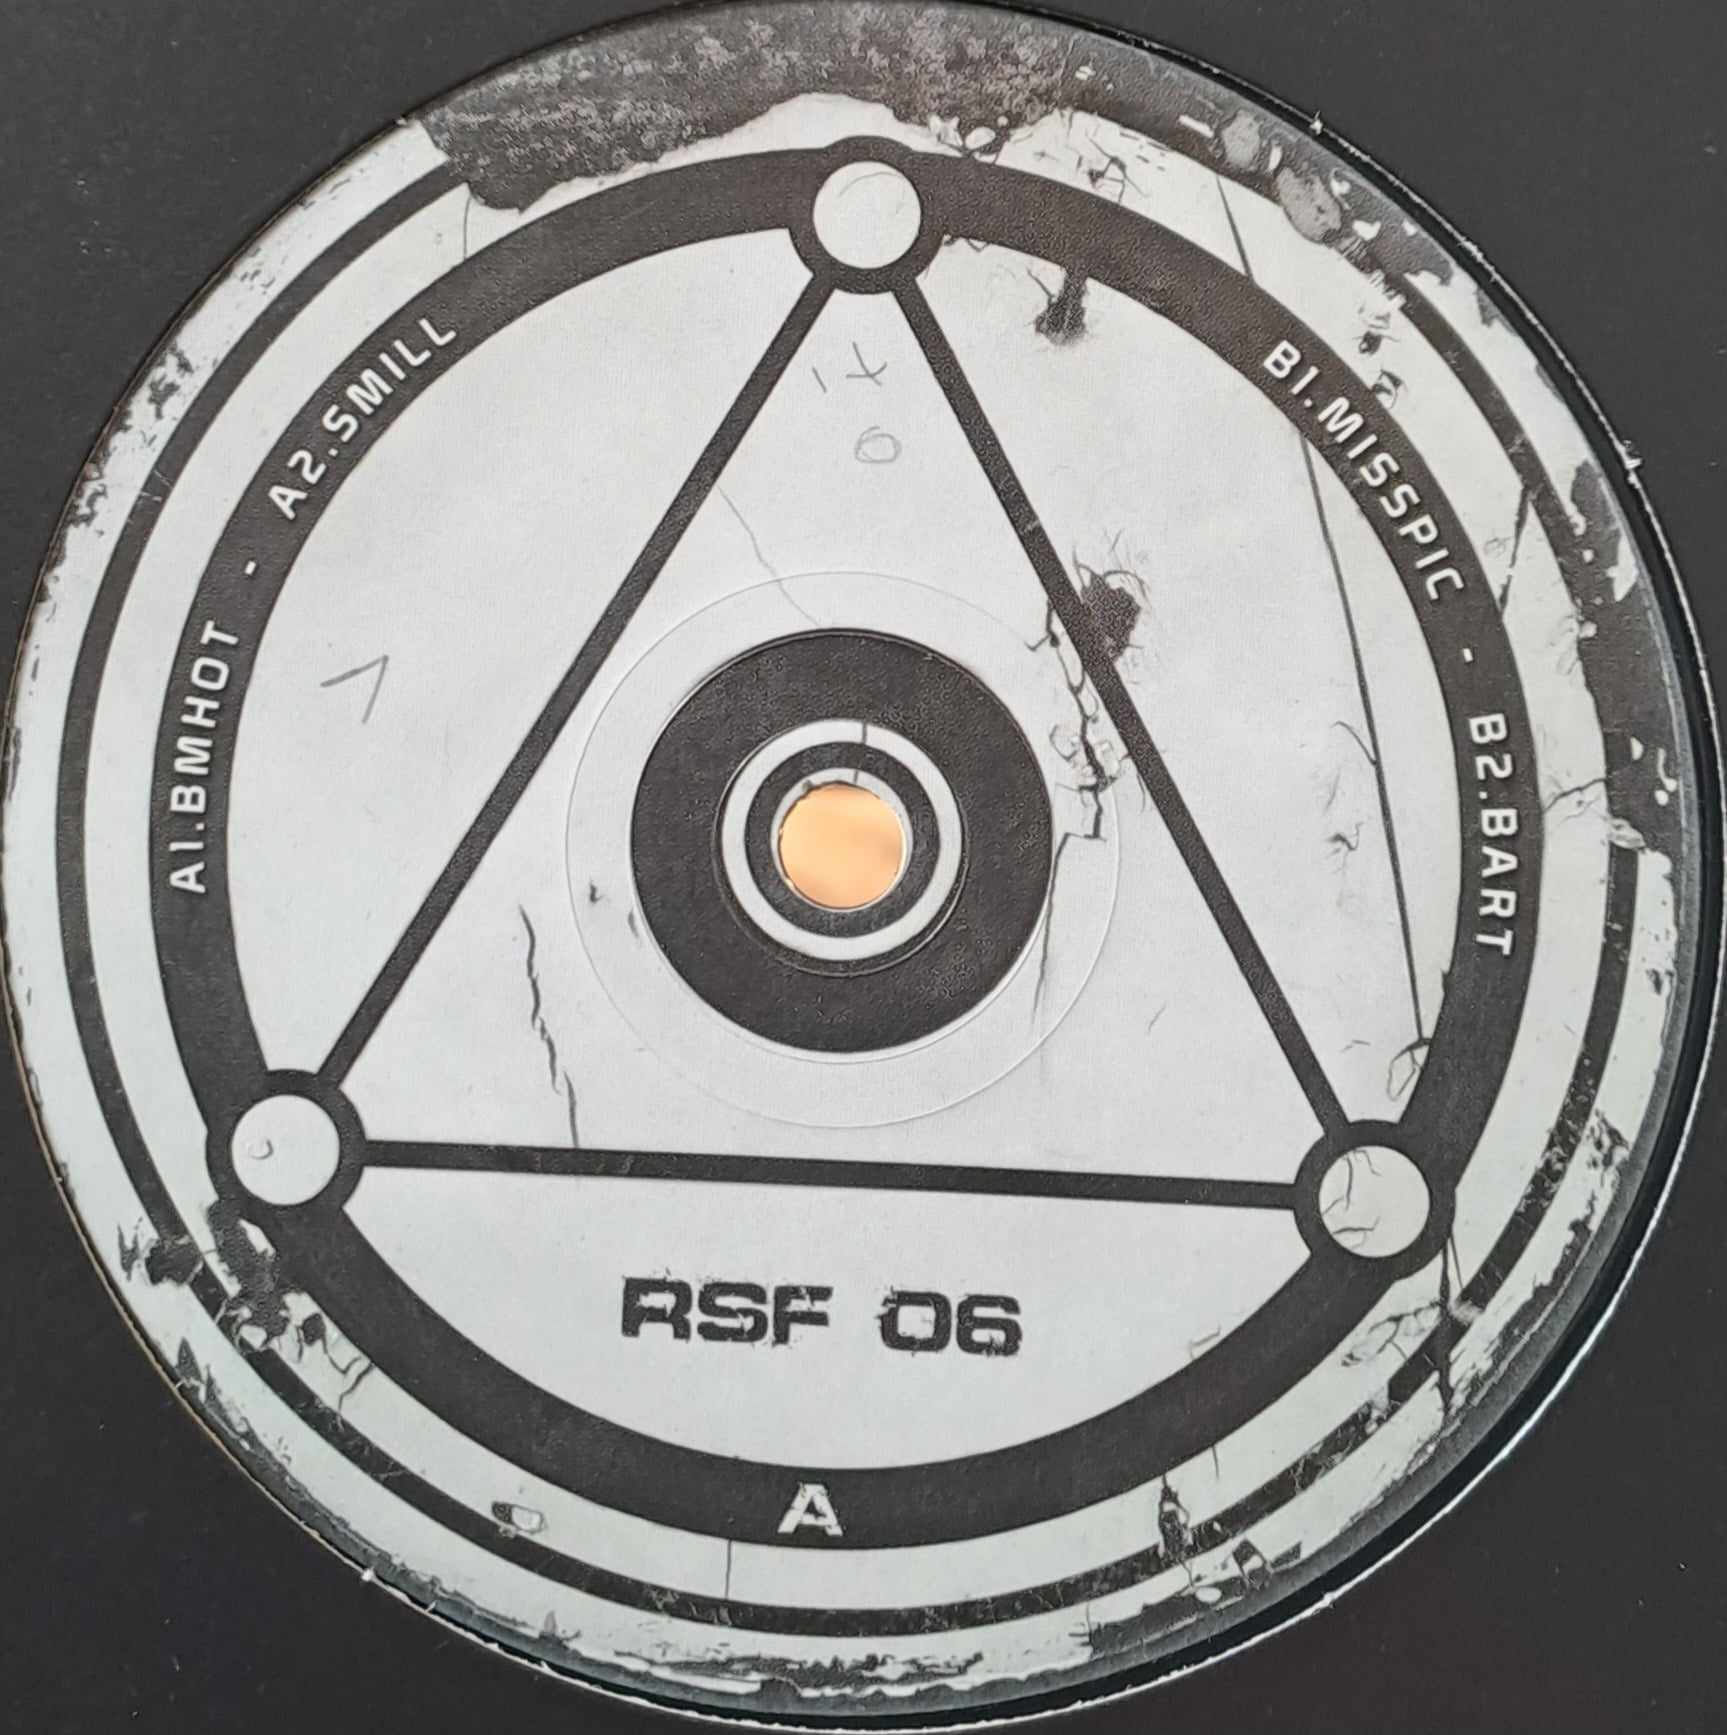 RSF 06 (original) - vinyle freetekno